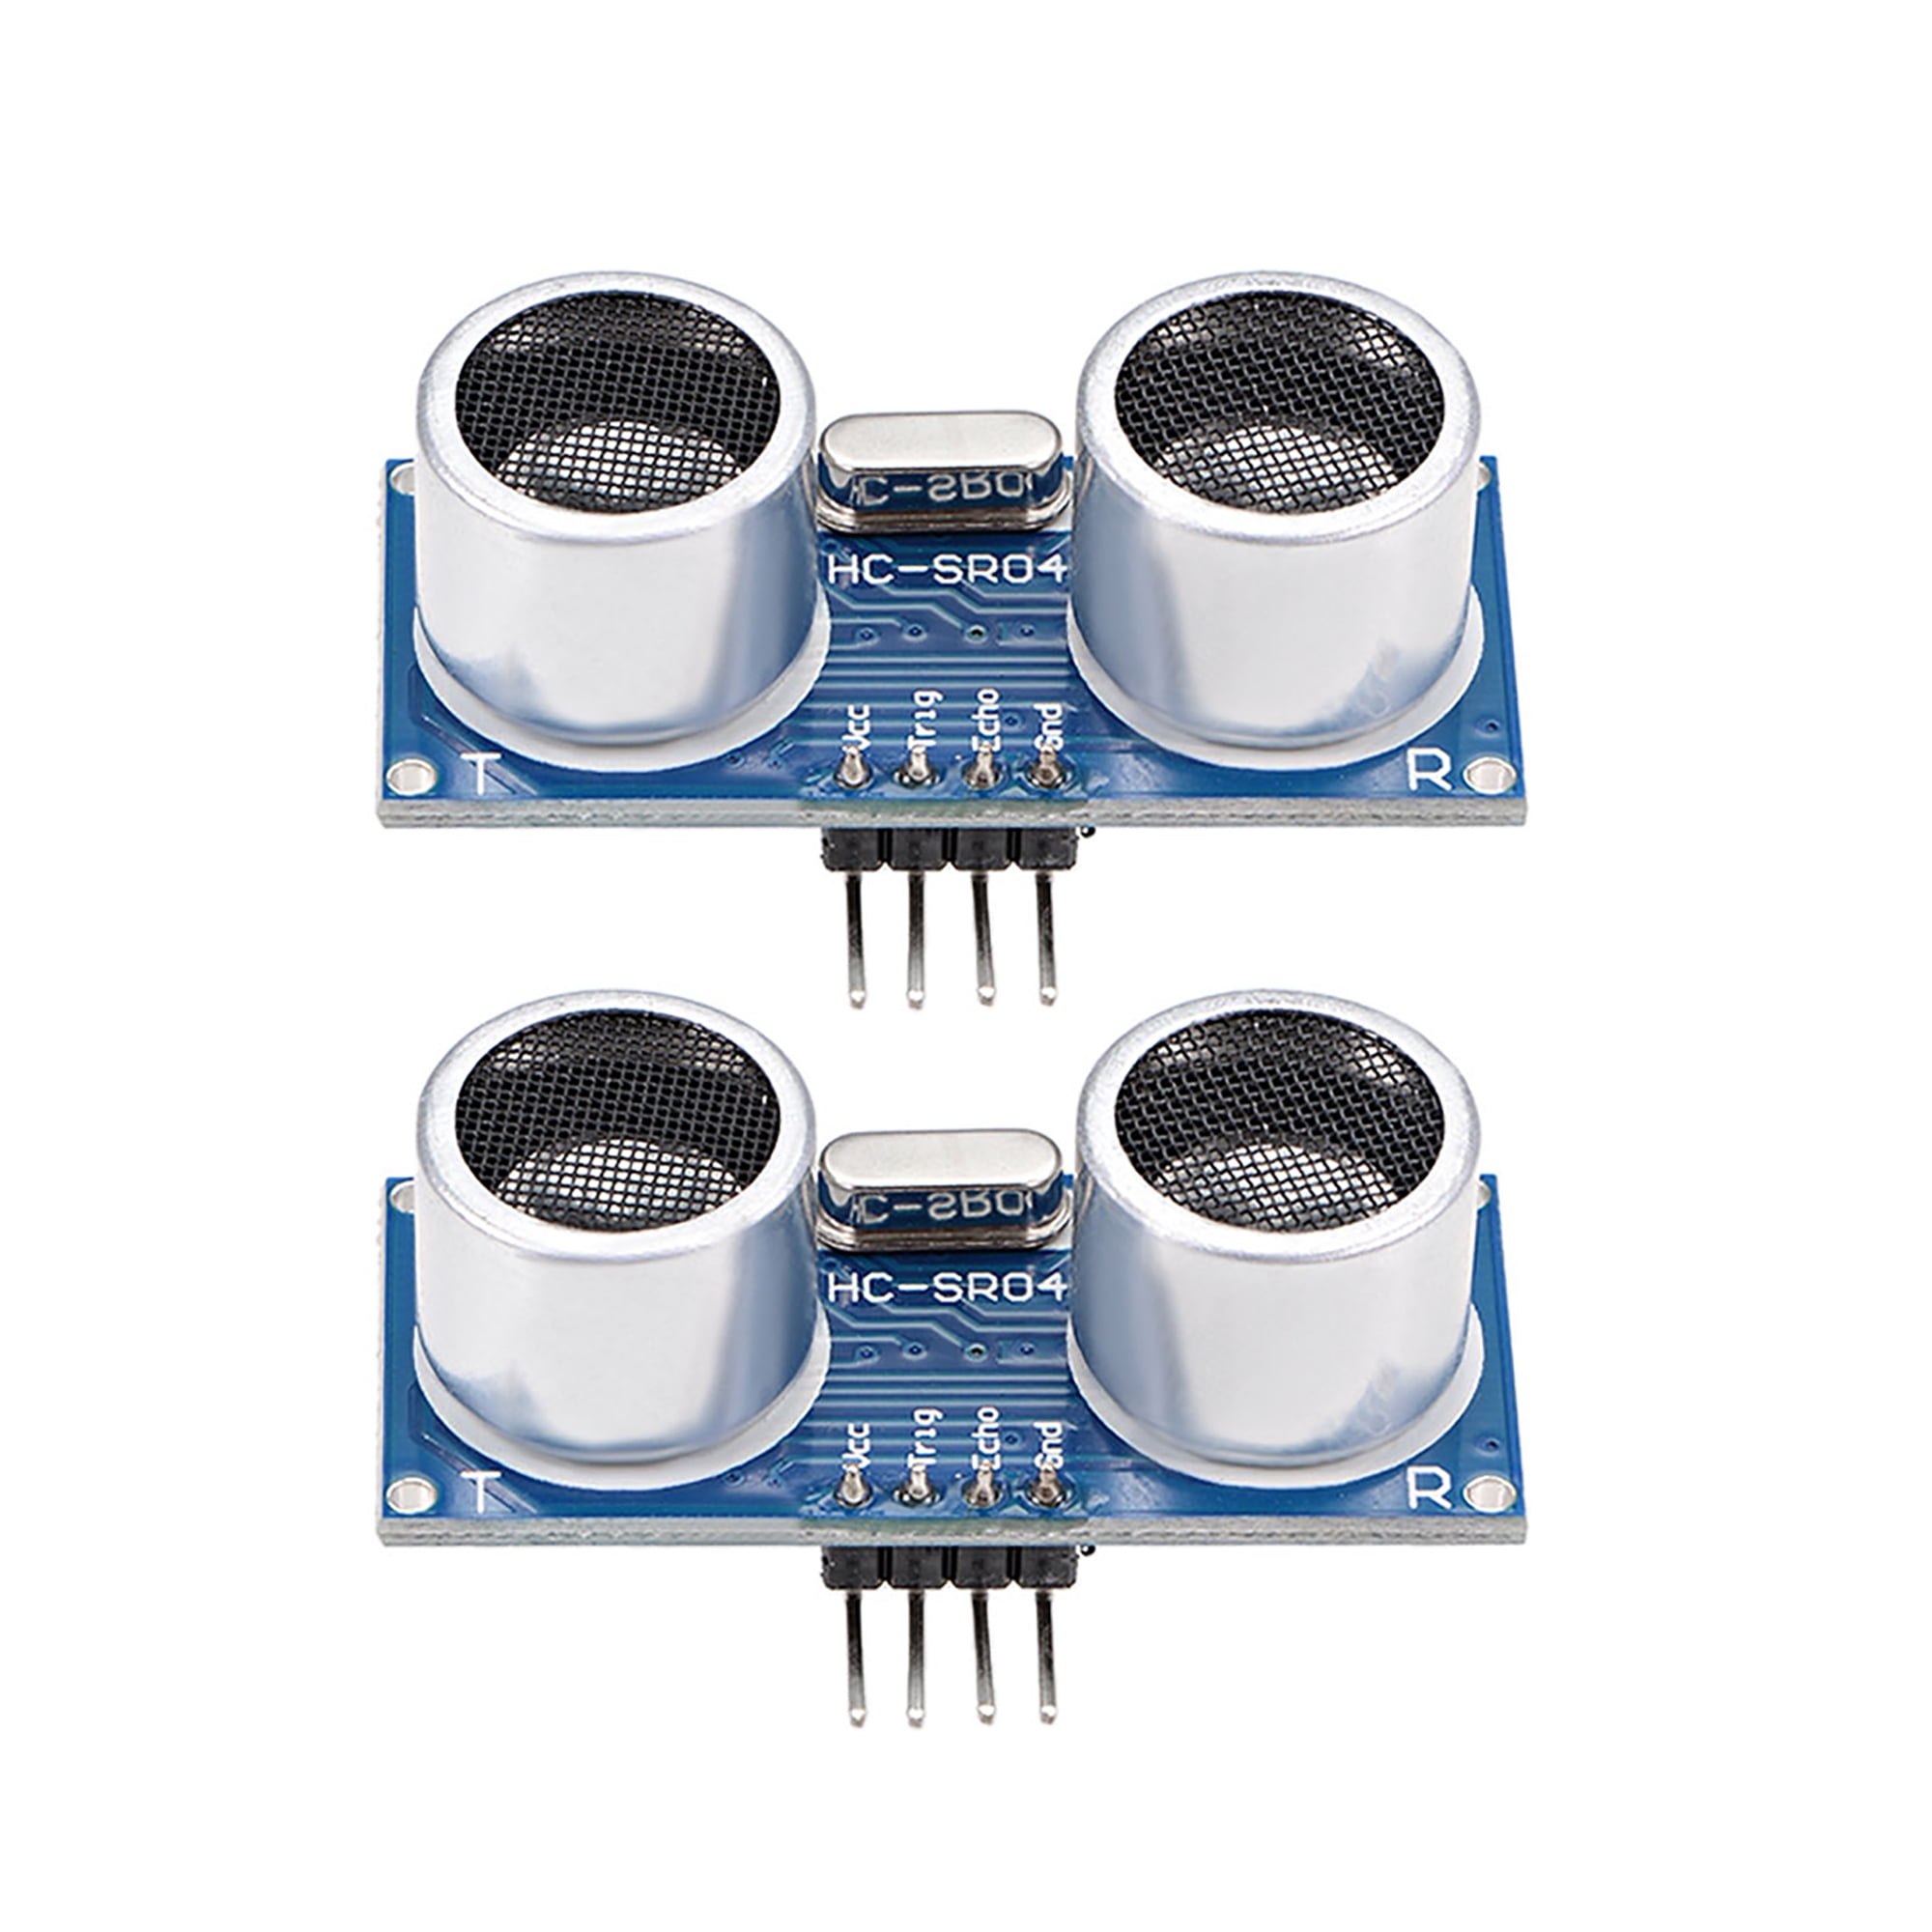 pick up be quiet Drought Ultrasonic Module Distance Sensor DC5V for Arduino UNO R3 Robot 2pcs |  Walmart Canada